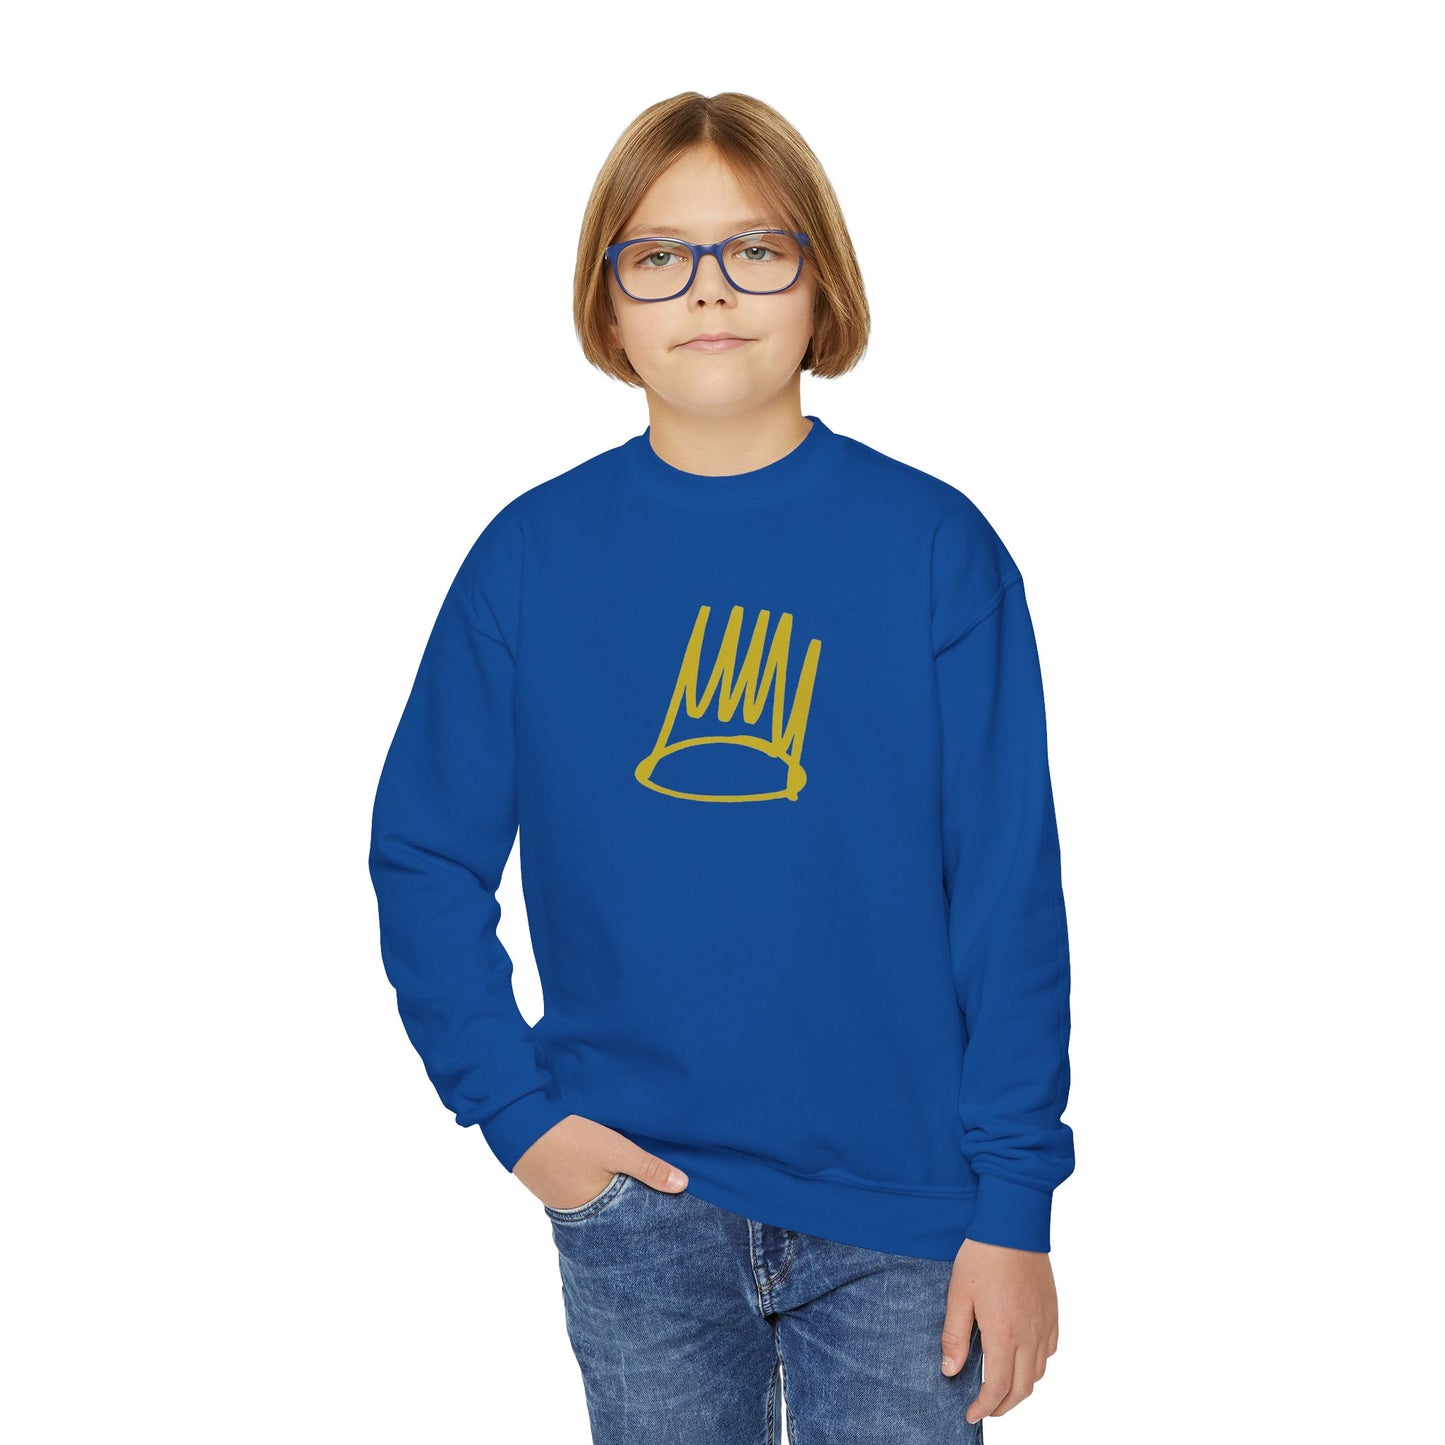 J Cole Crown Youth Sweatshirt